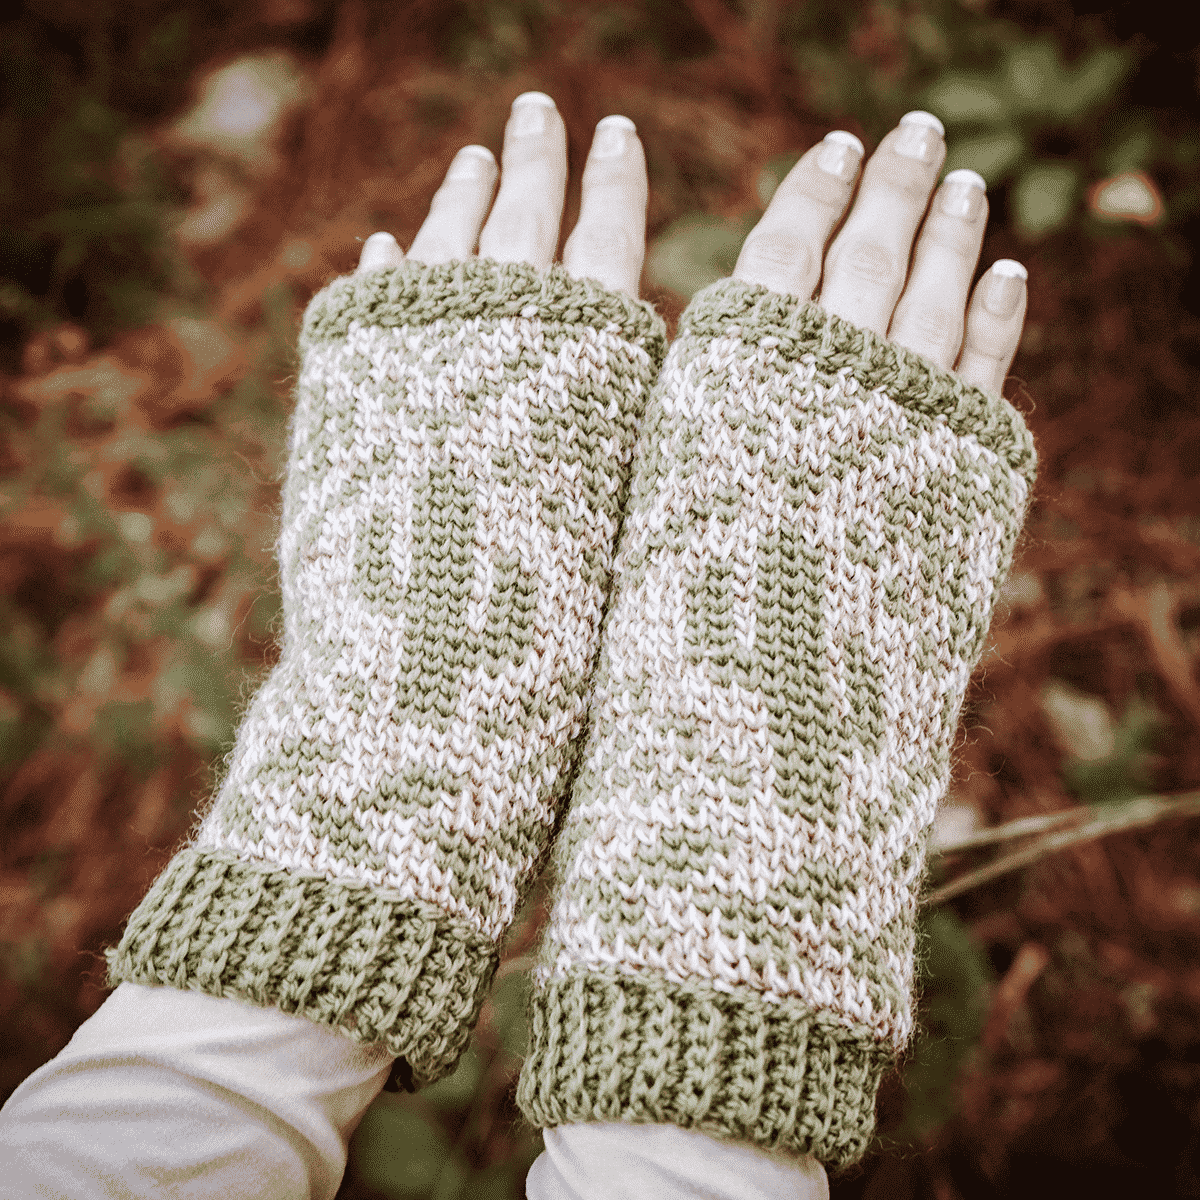 Crochet Cactus Fingerless Mittens - Free Pattern